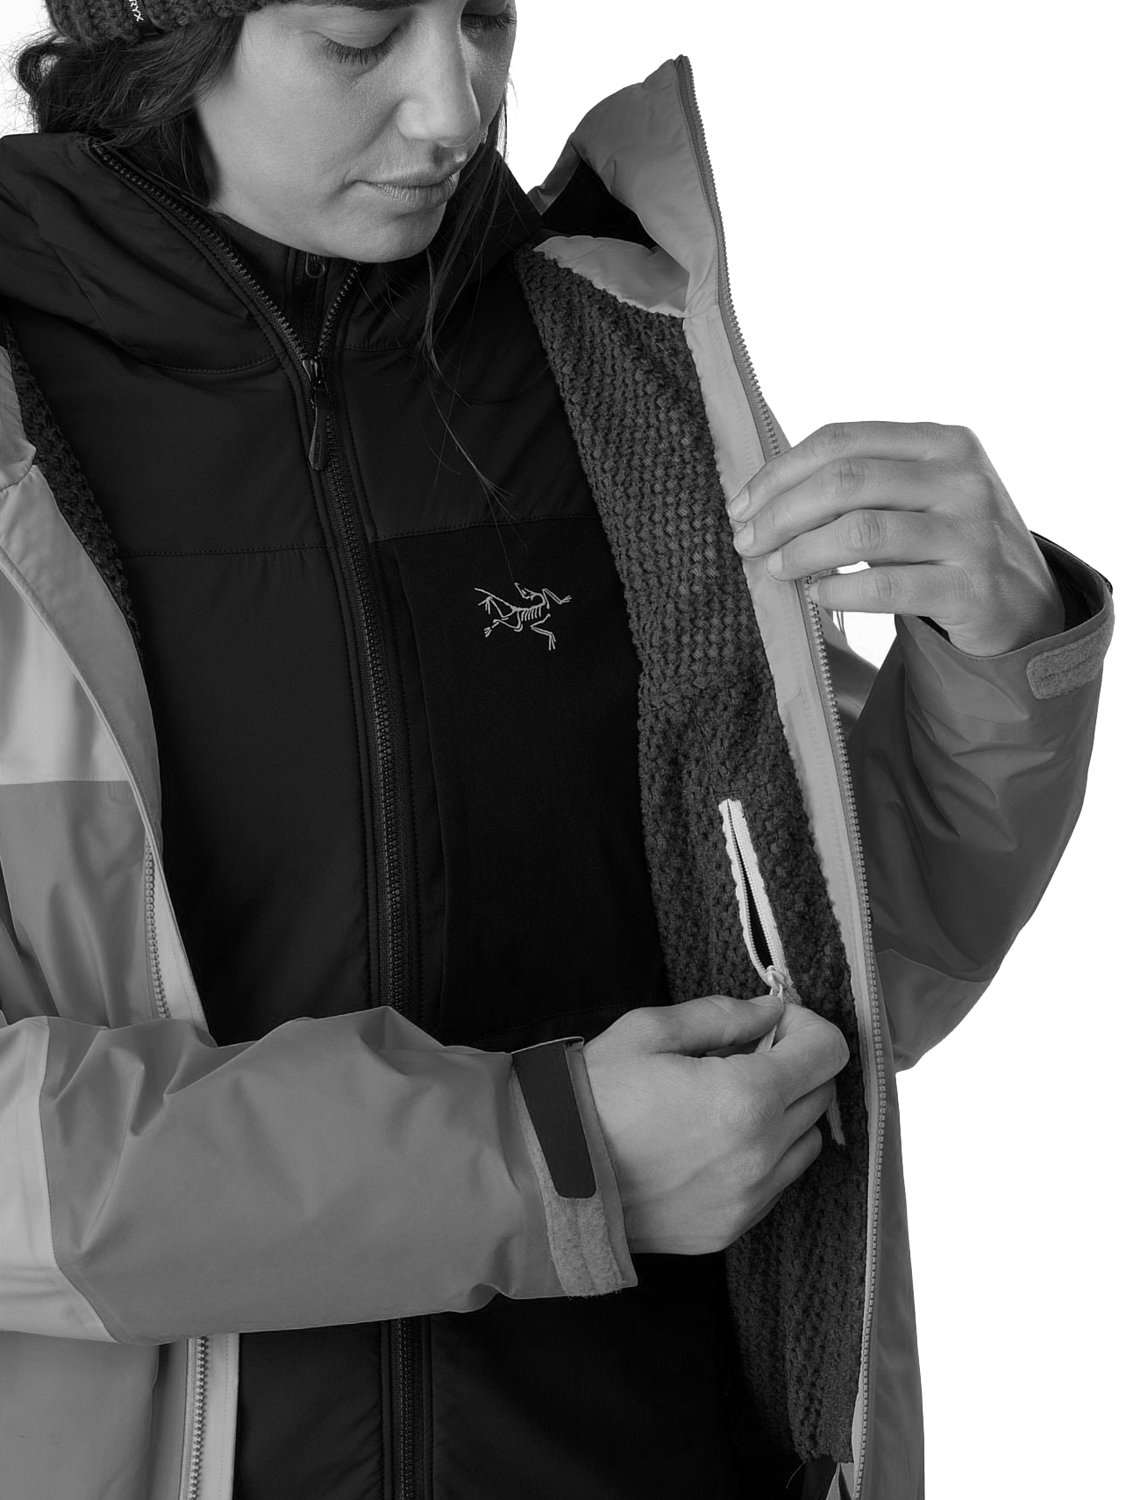 Куртка для активного отдыха Arcteryx 2020-21 Shashka is Jacket Women's Anti-Gravity